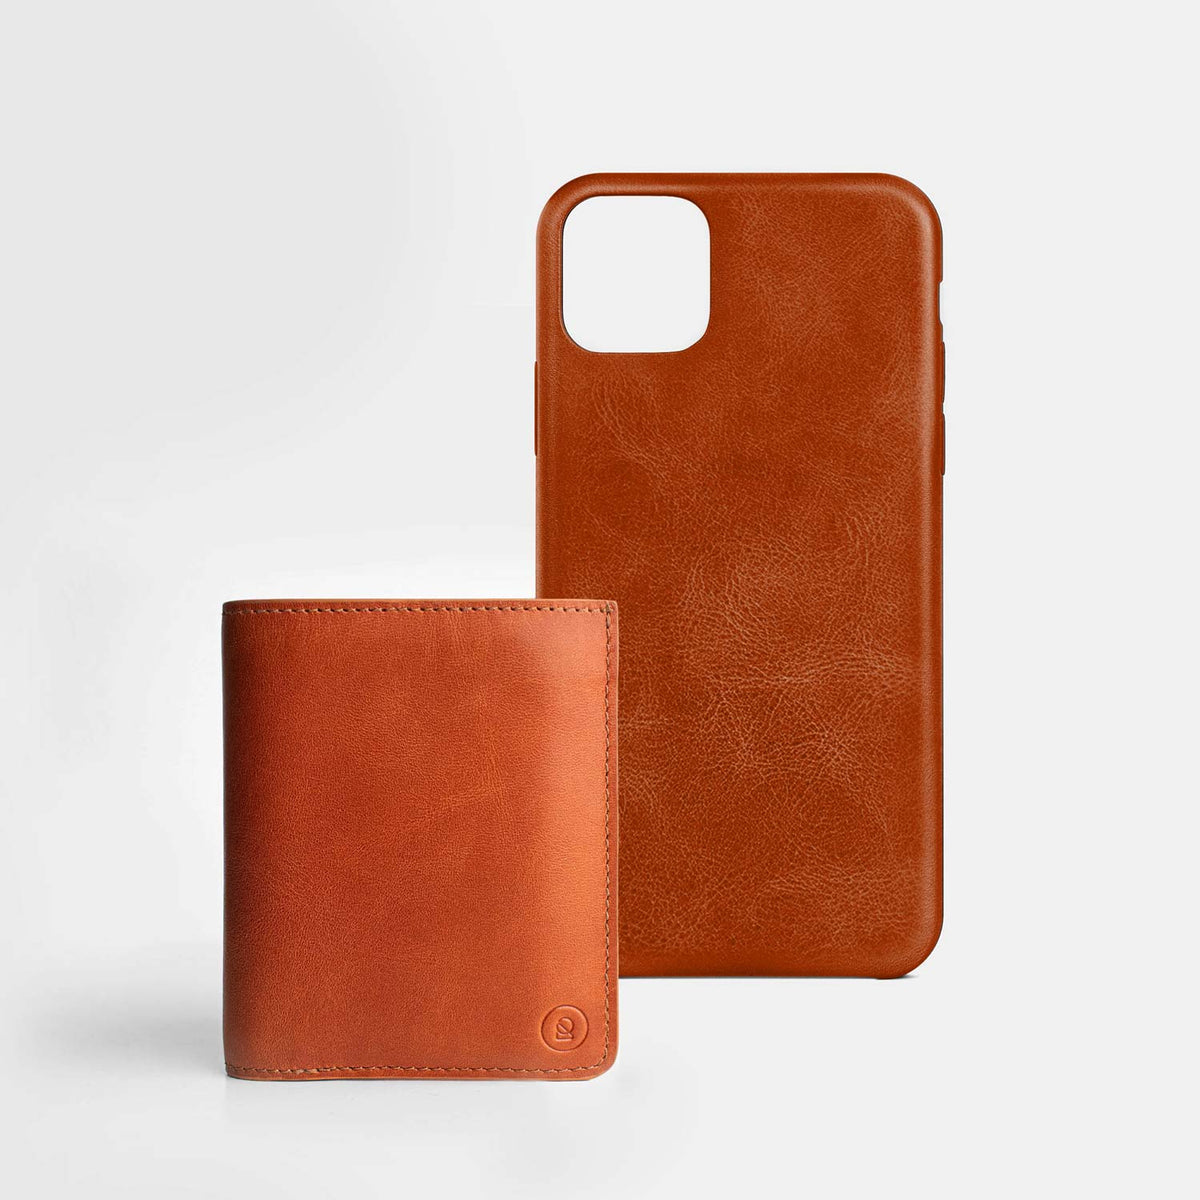 Leather iPhone 12 mini Shell Case - Saddle Brown - RYAN London